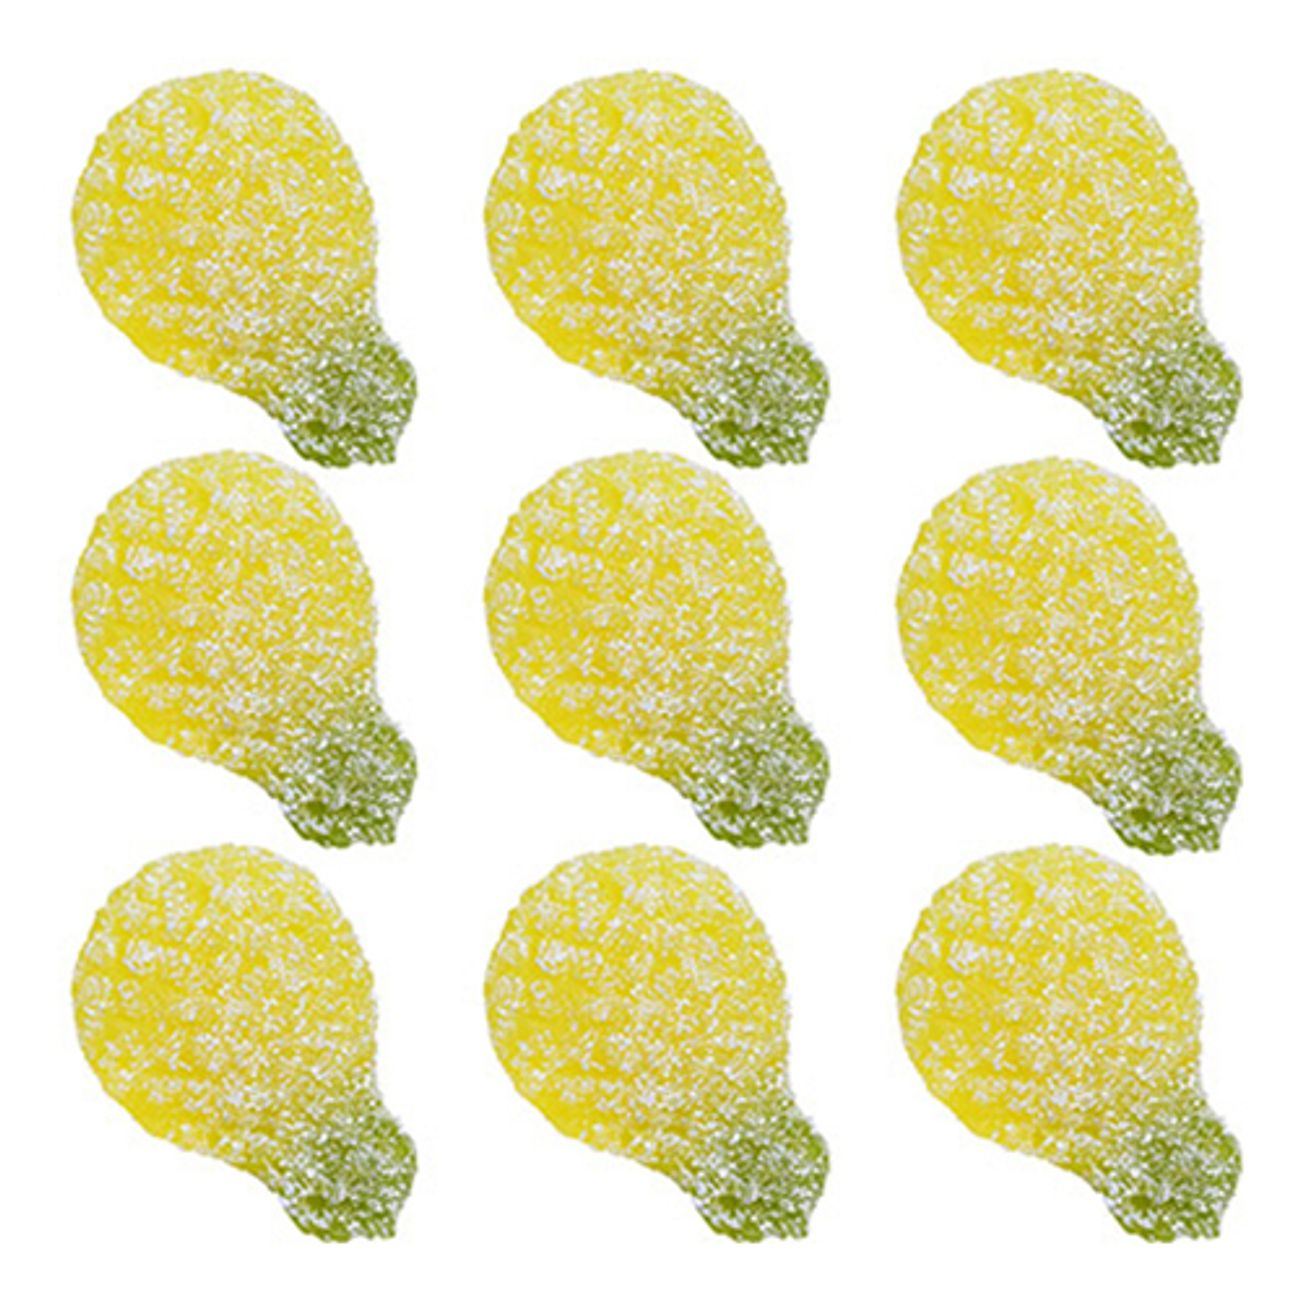 malaco-sour-pineapple-1